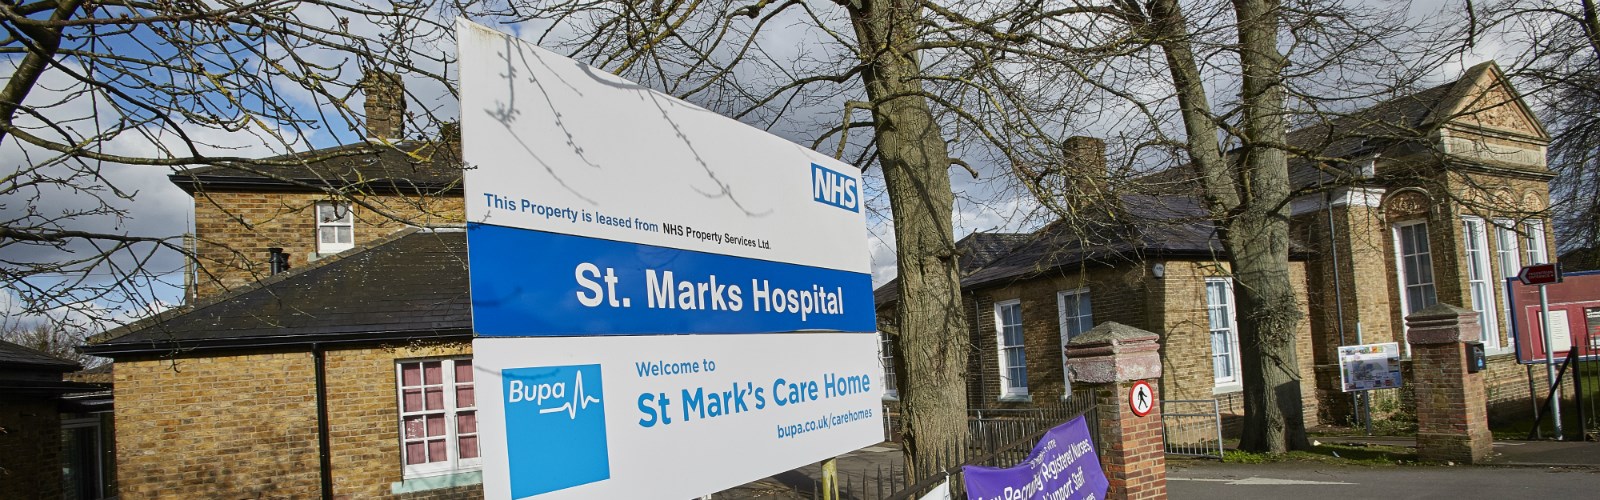 Image of St Mark's Hospital entrance